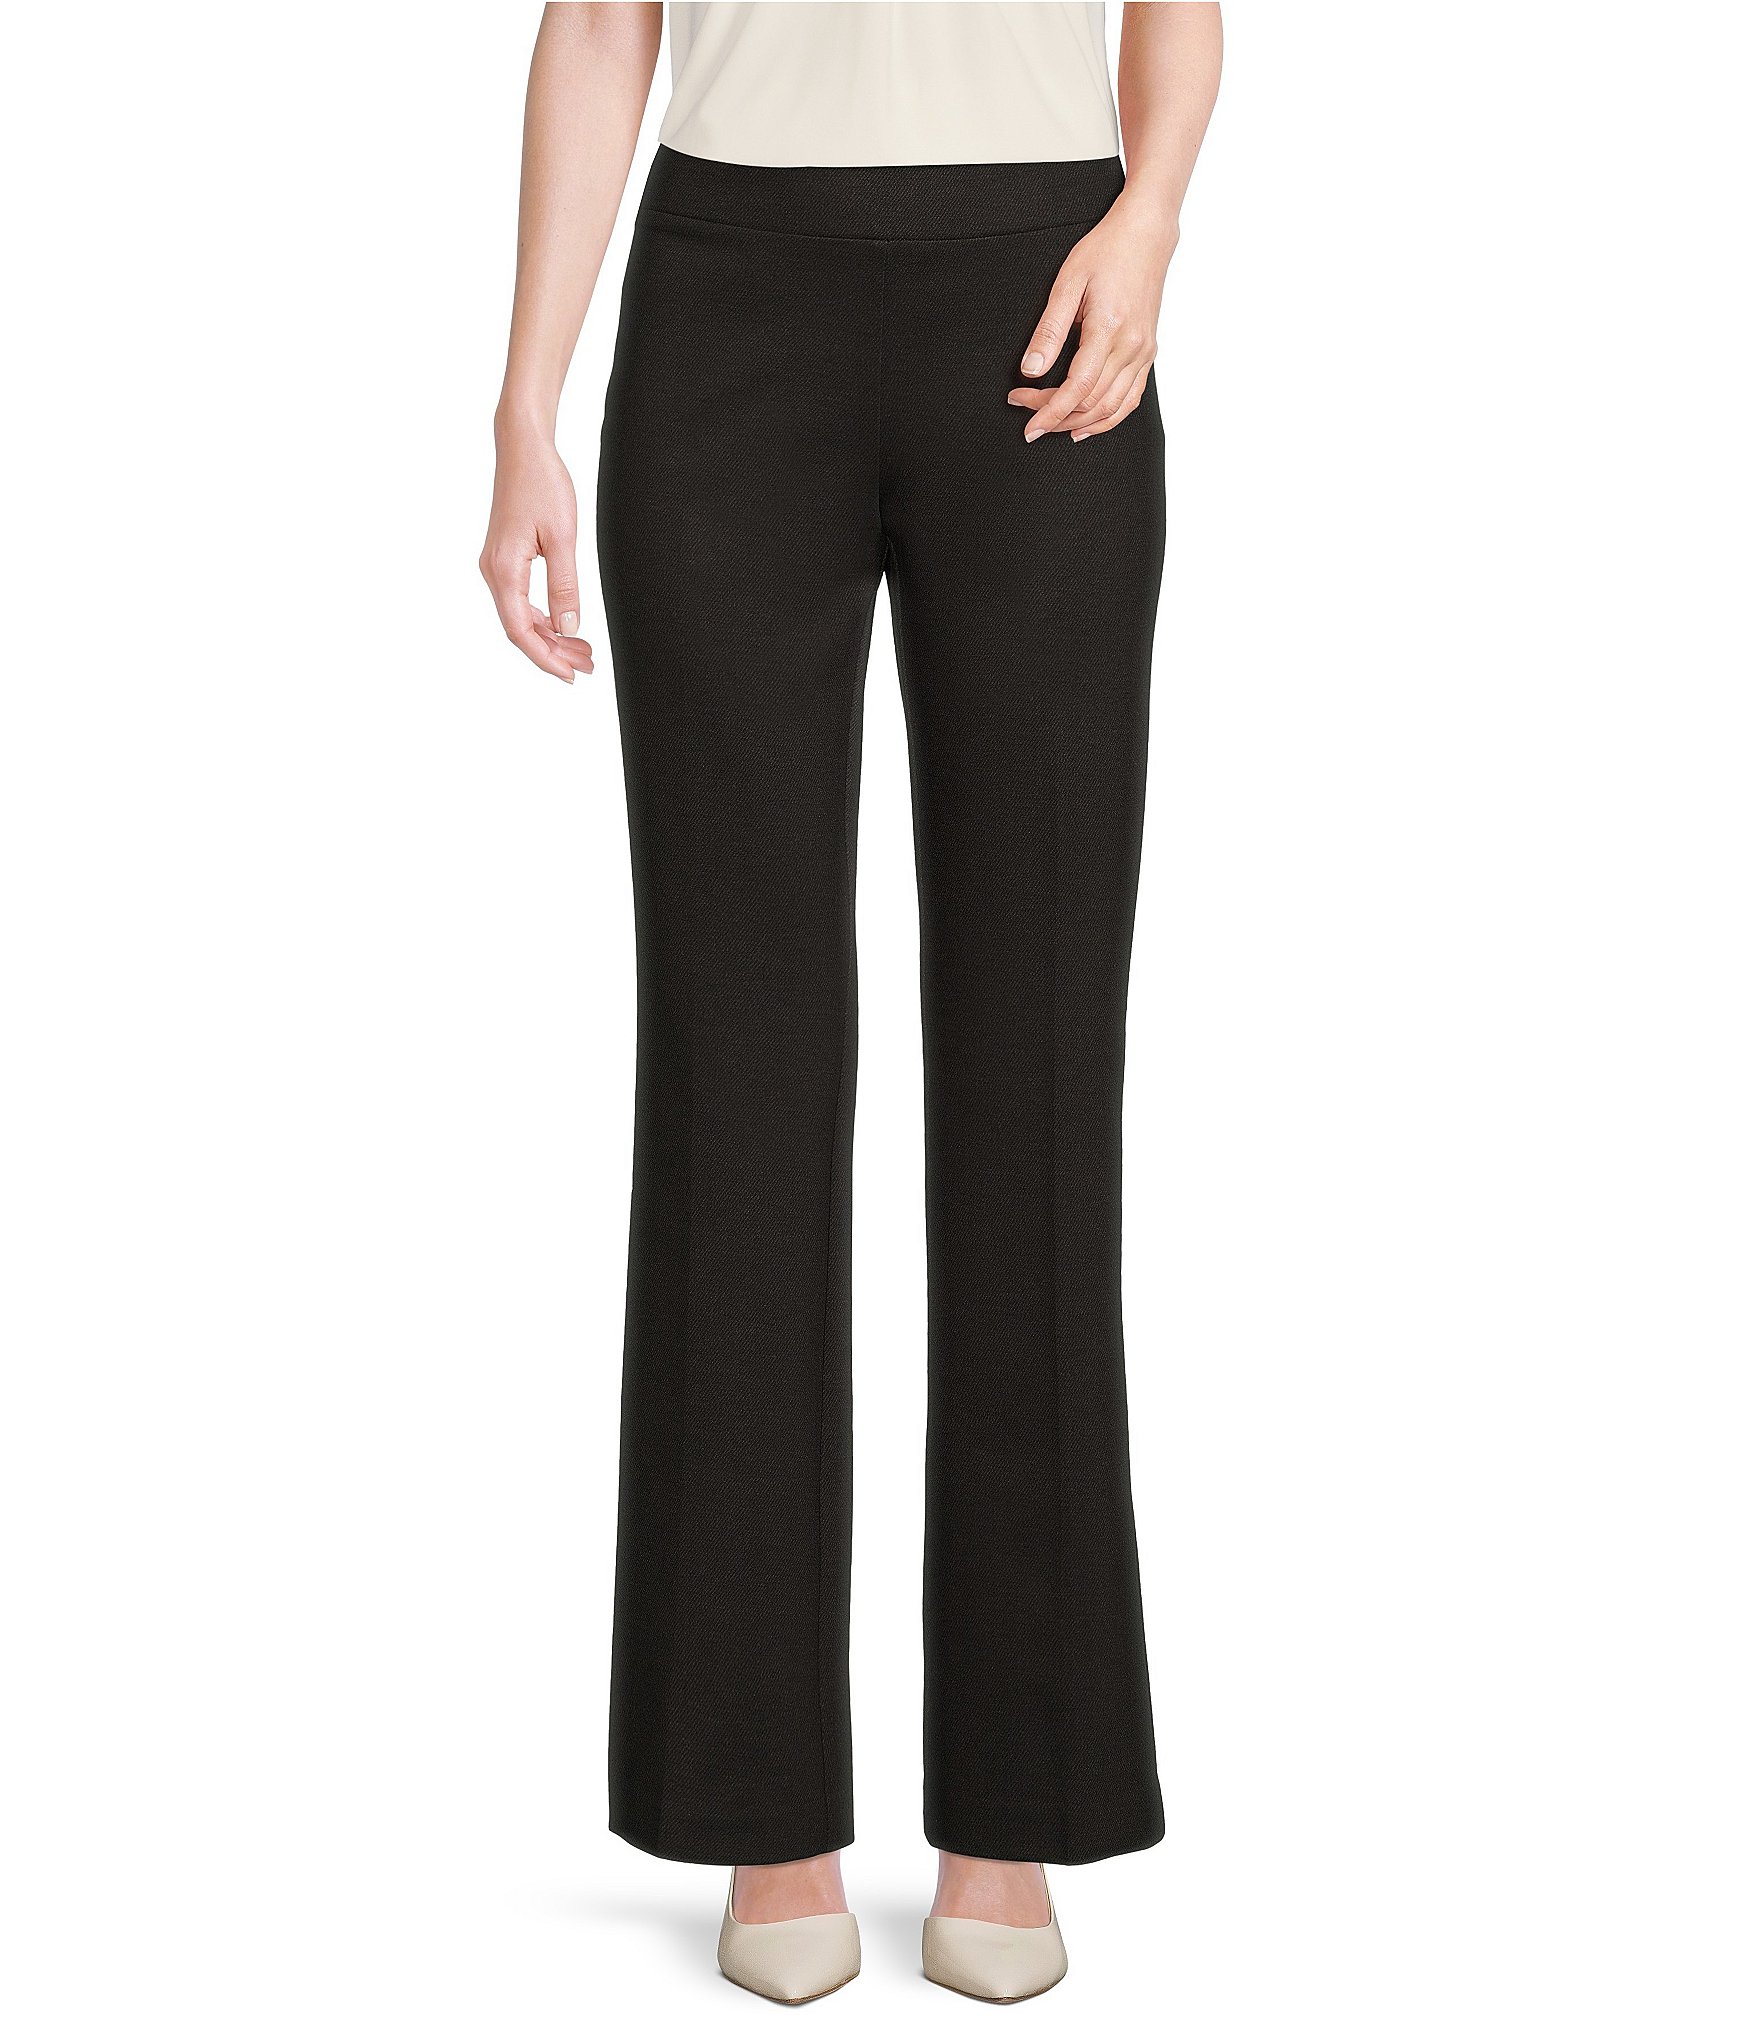 womens elastic waist pants: Petite Suits & Workwear